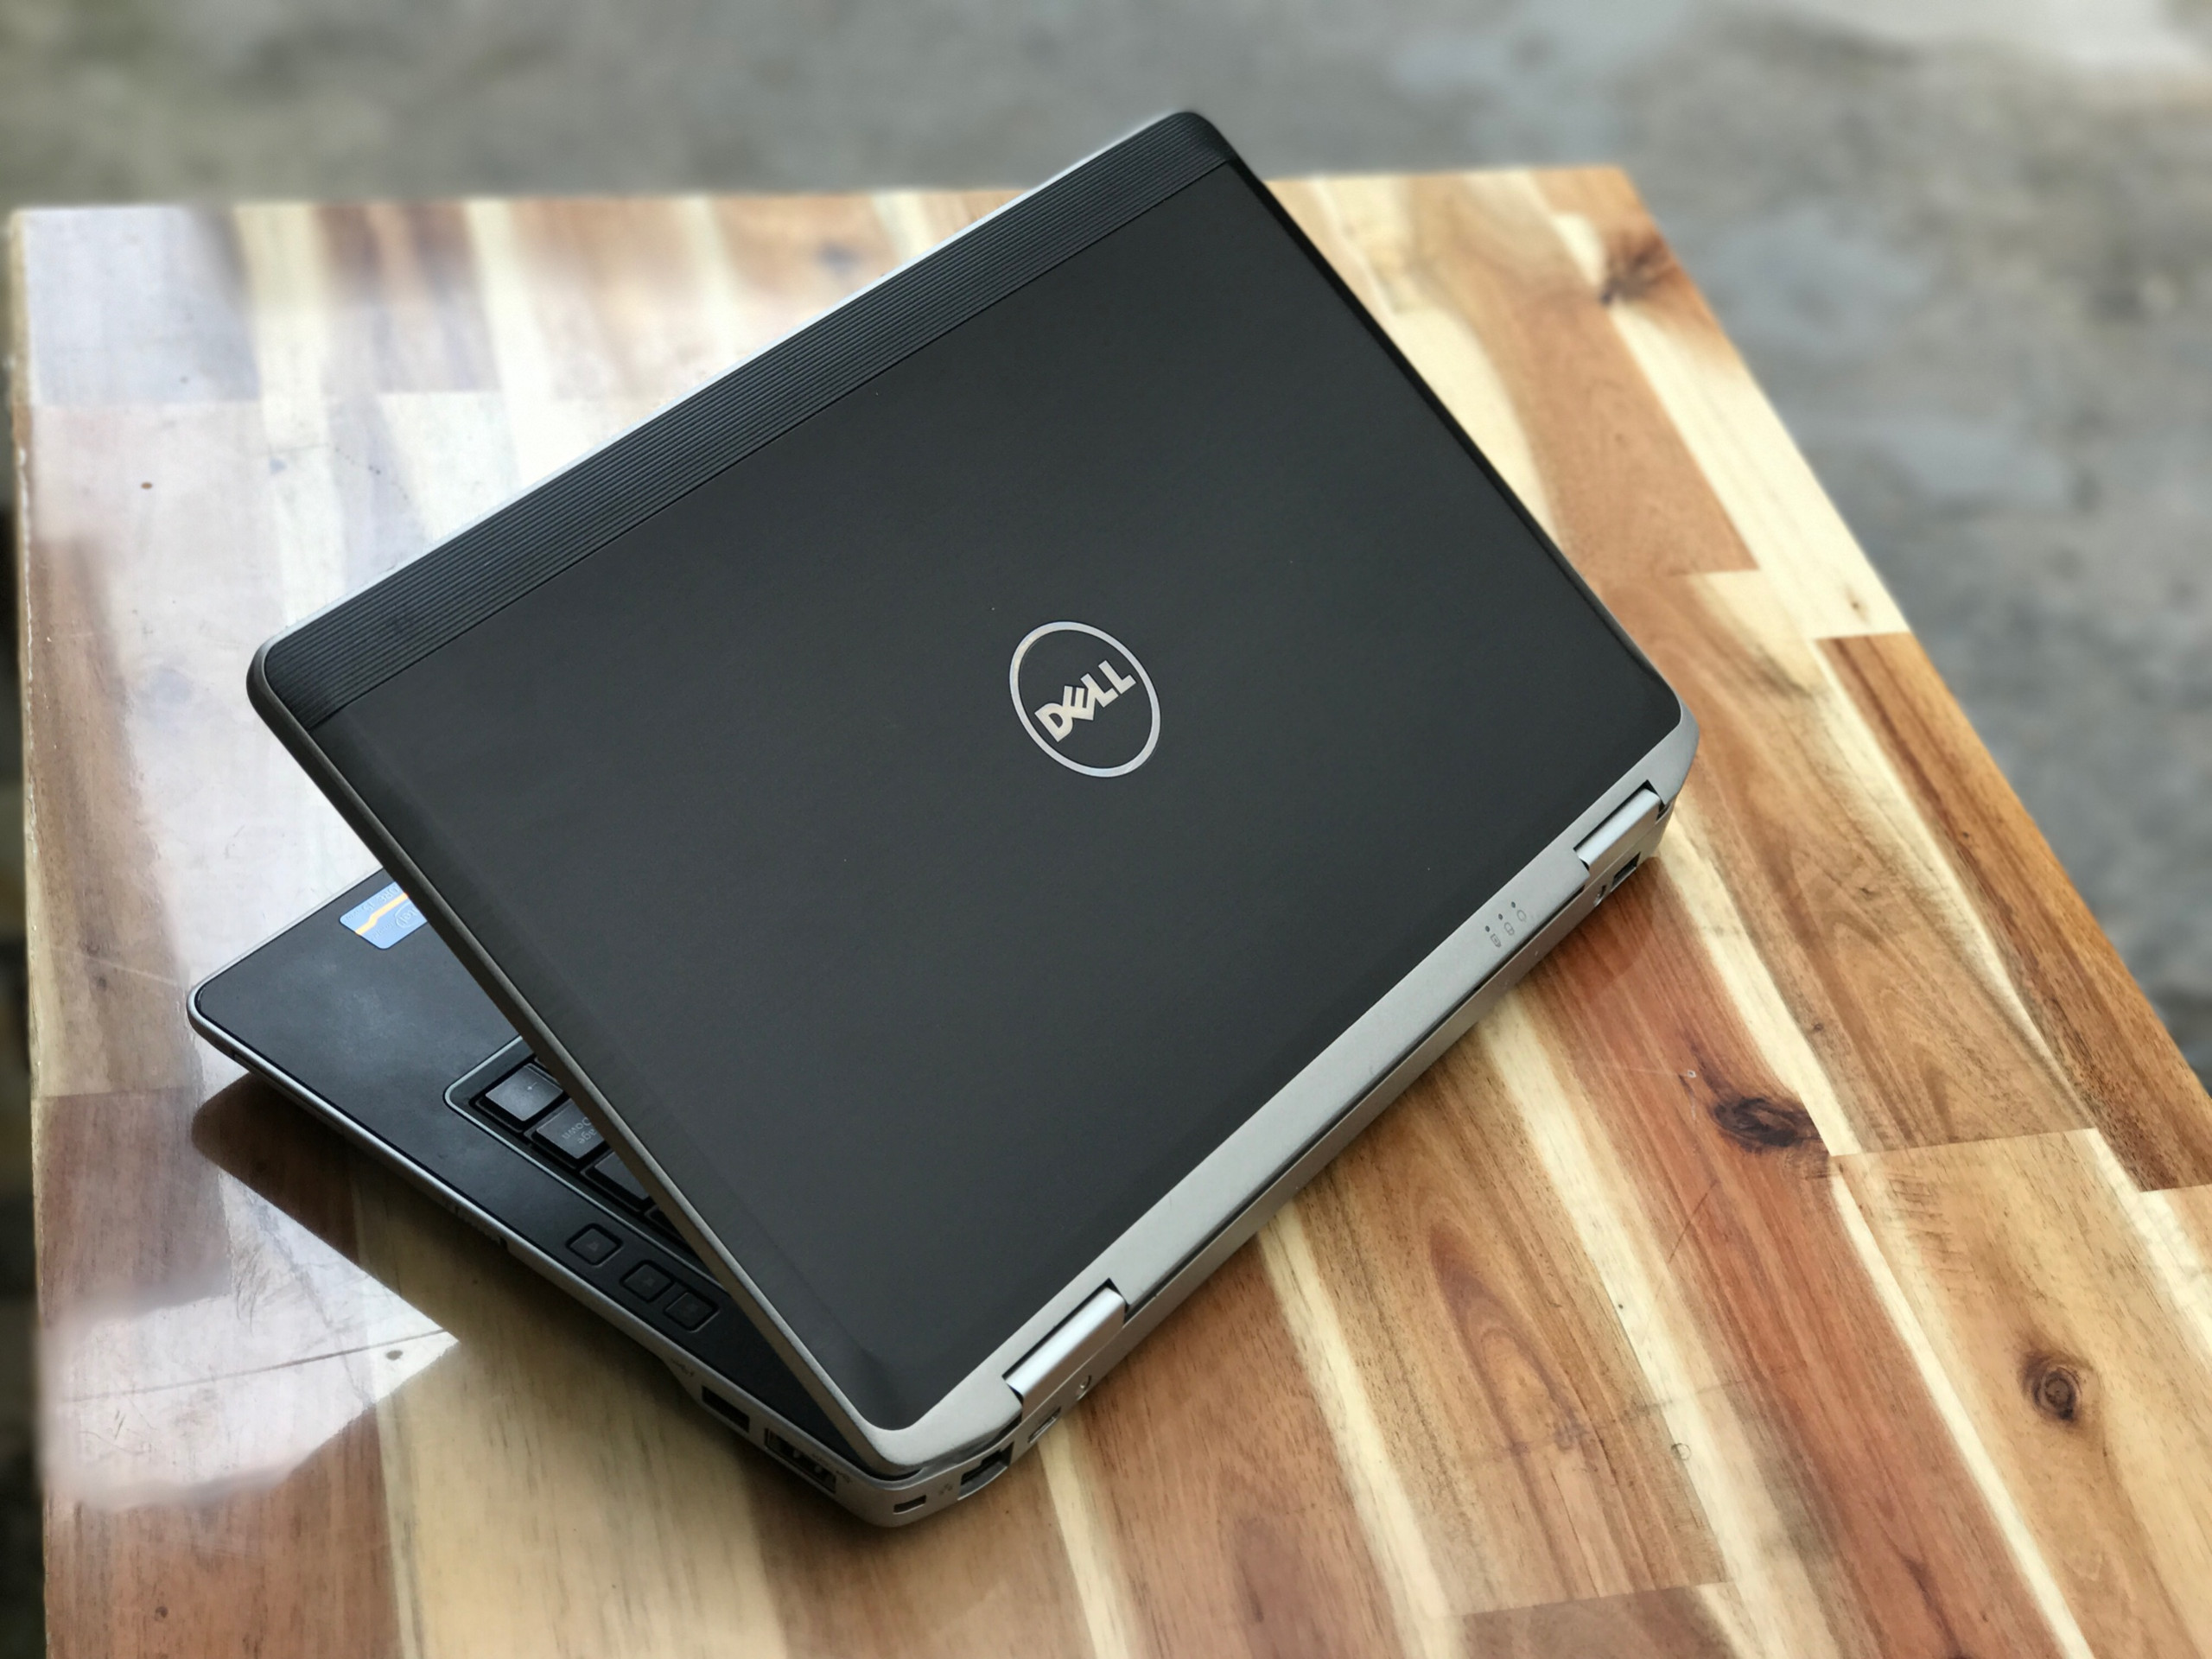 Laptop Dell Latitude E6420, i5 2520M 4G 320G Đẹp zin 100% Giá rẻ2